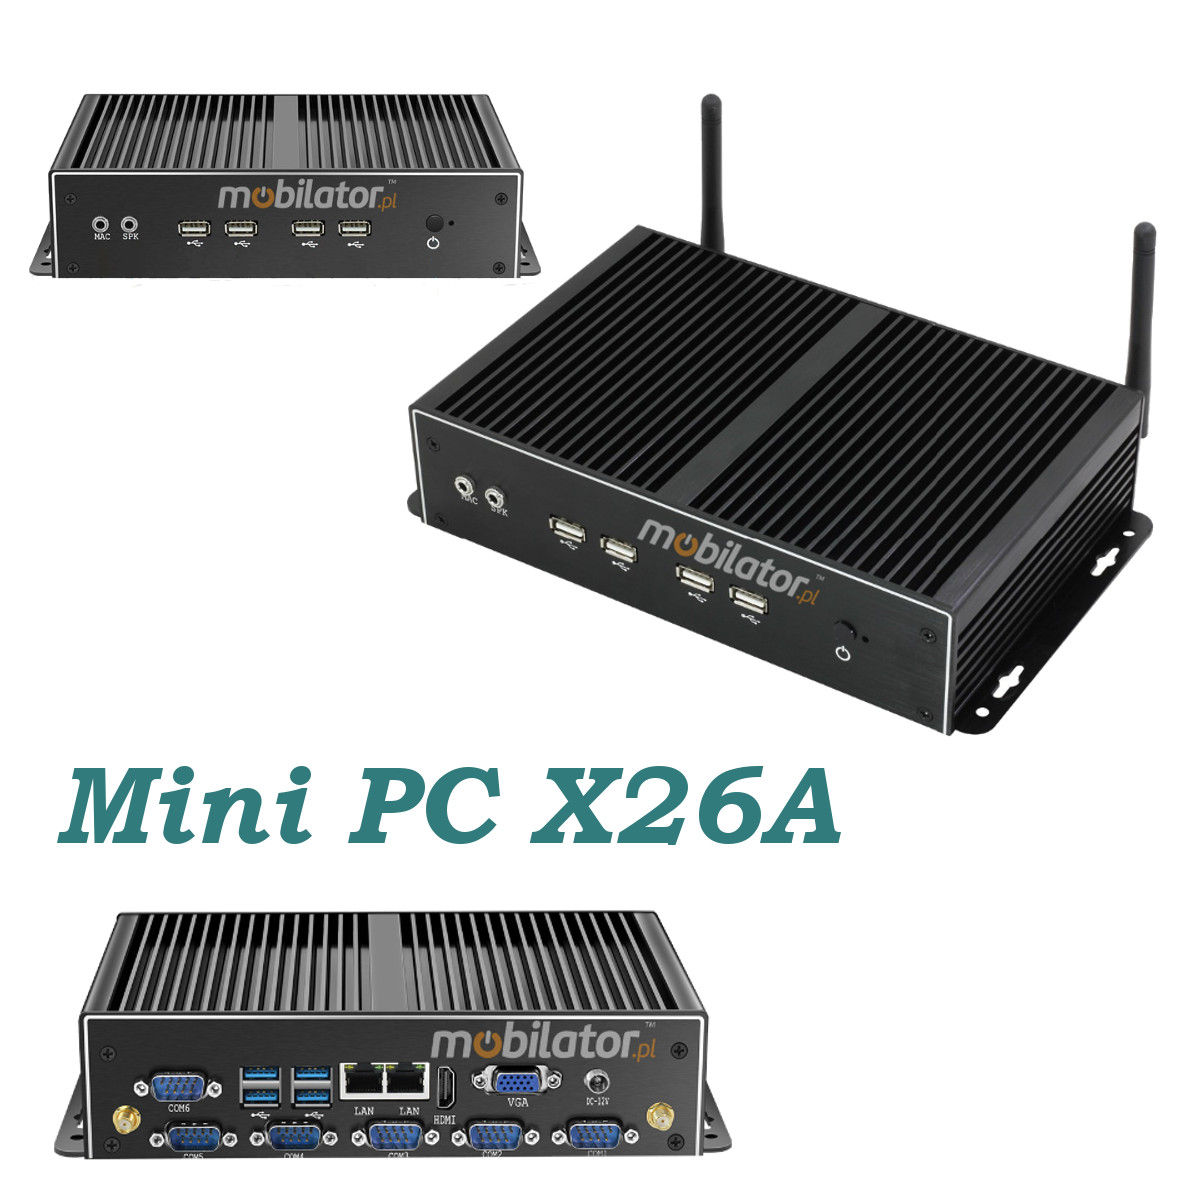 MiniPC yBOX-X26A Bezwentylatorowy May Komputer mobilator pl